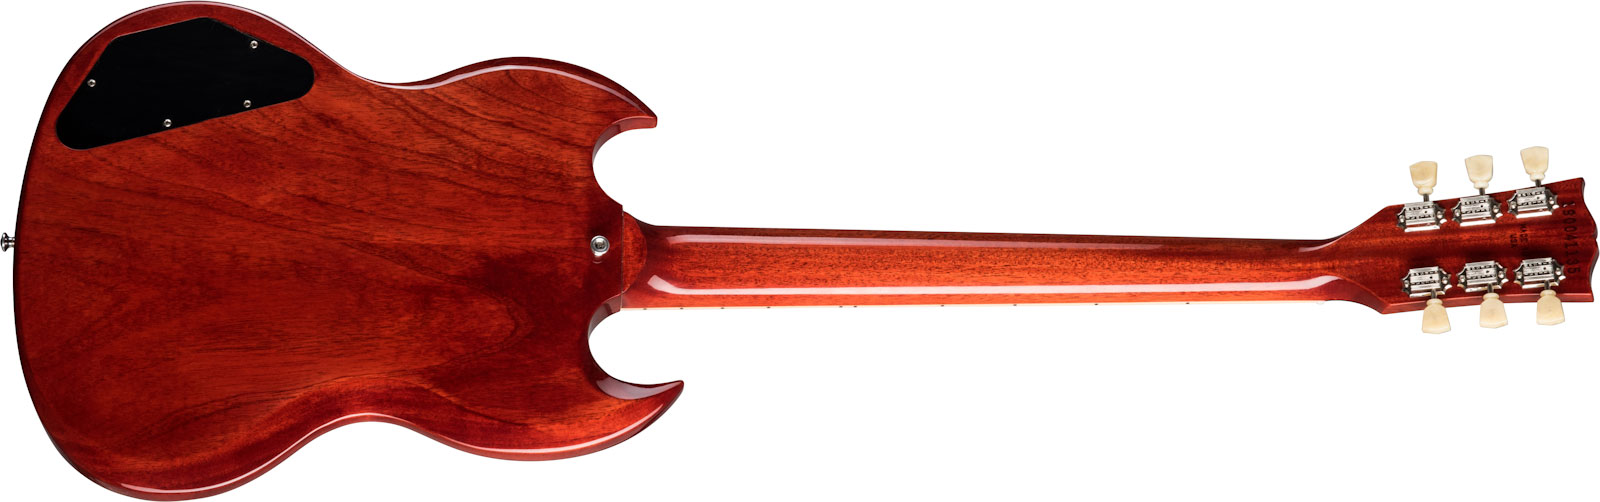 Gibson Sg Standard '61 Sideways Vibrola Original 2h Ht Rw - Vintage Cherry - Retro-Rock-E-Gitarre - Variation 1